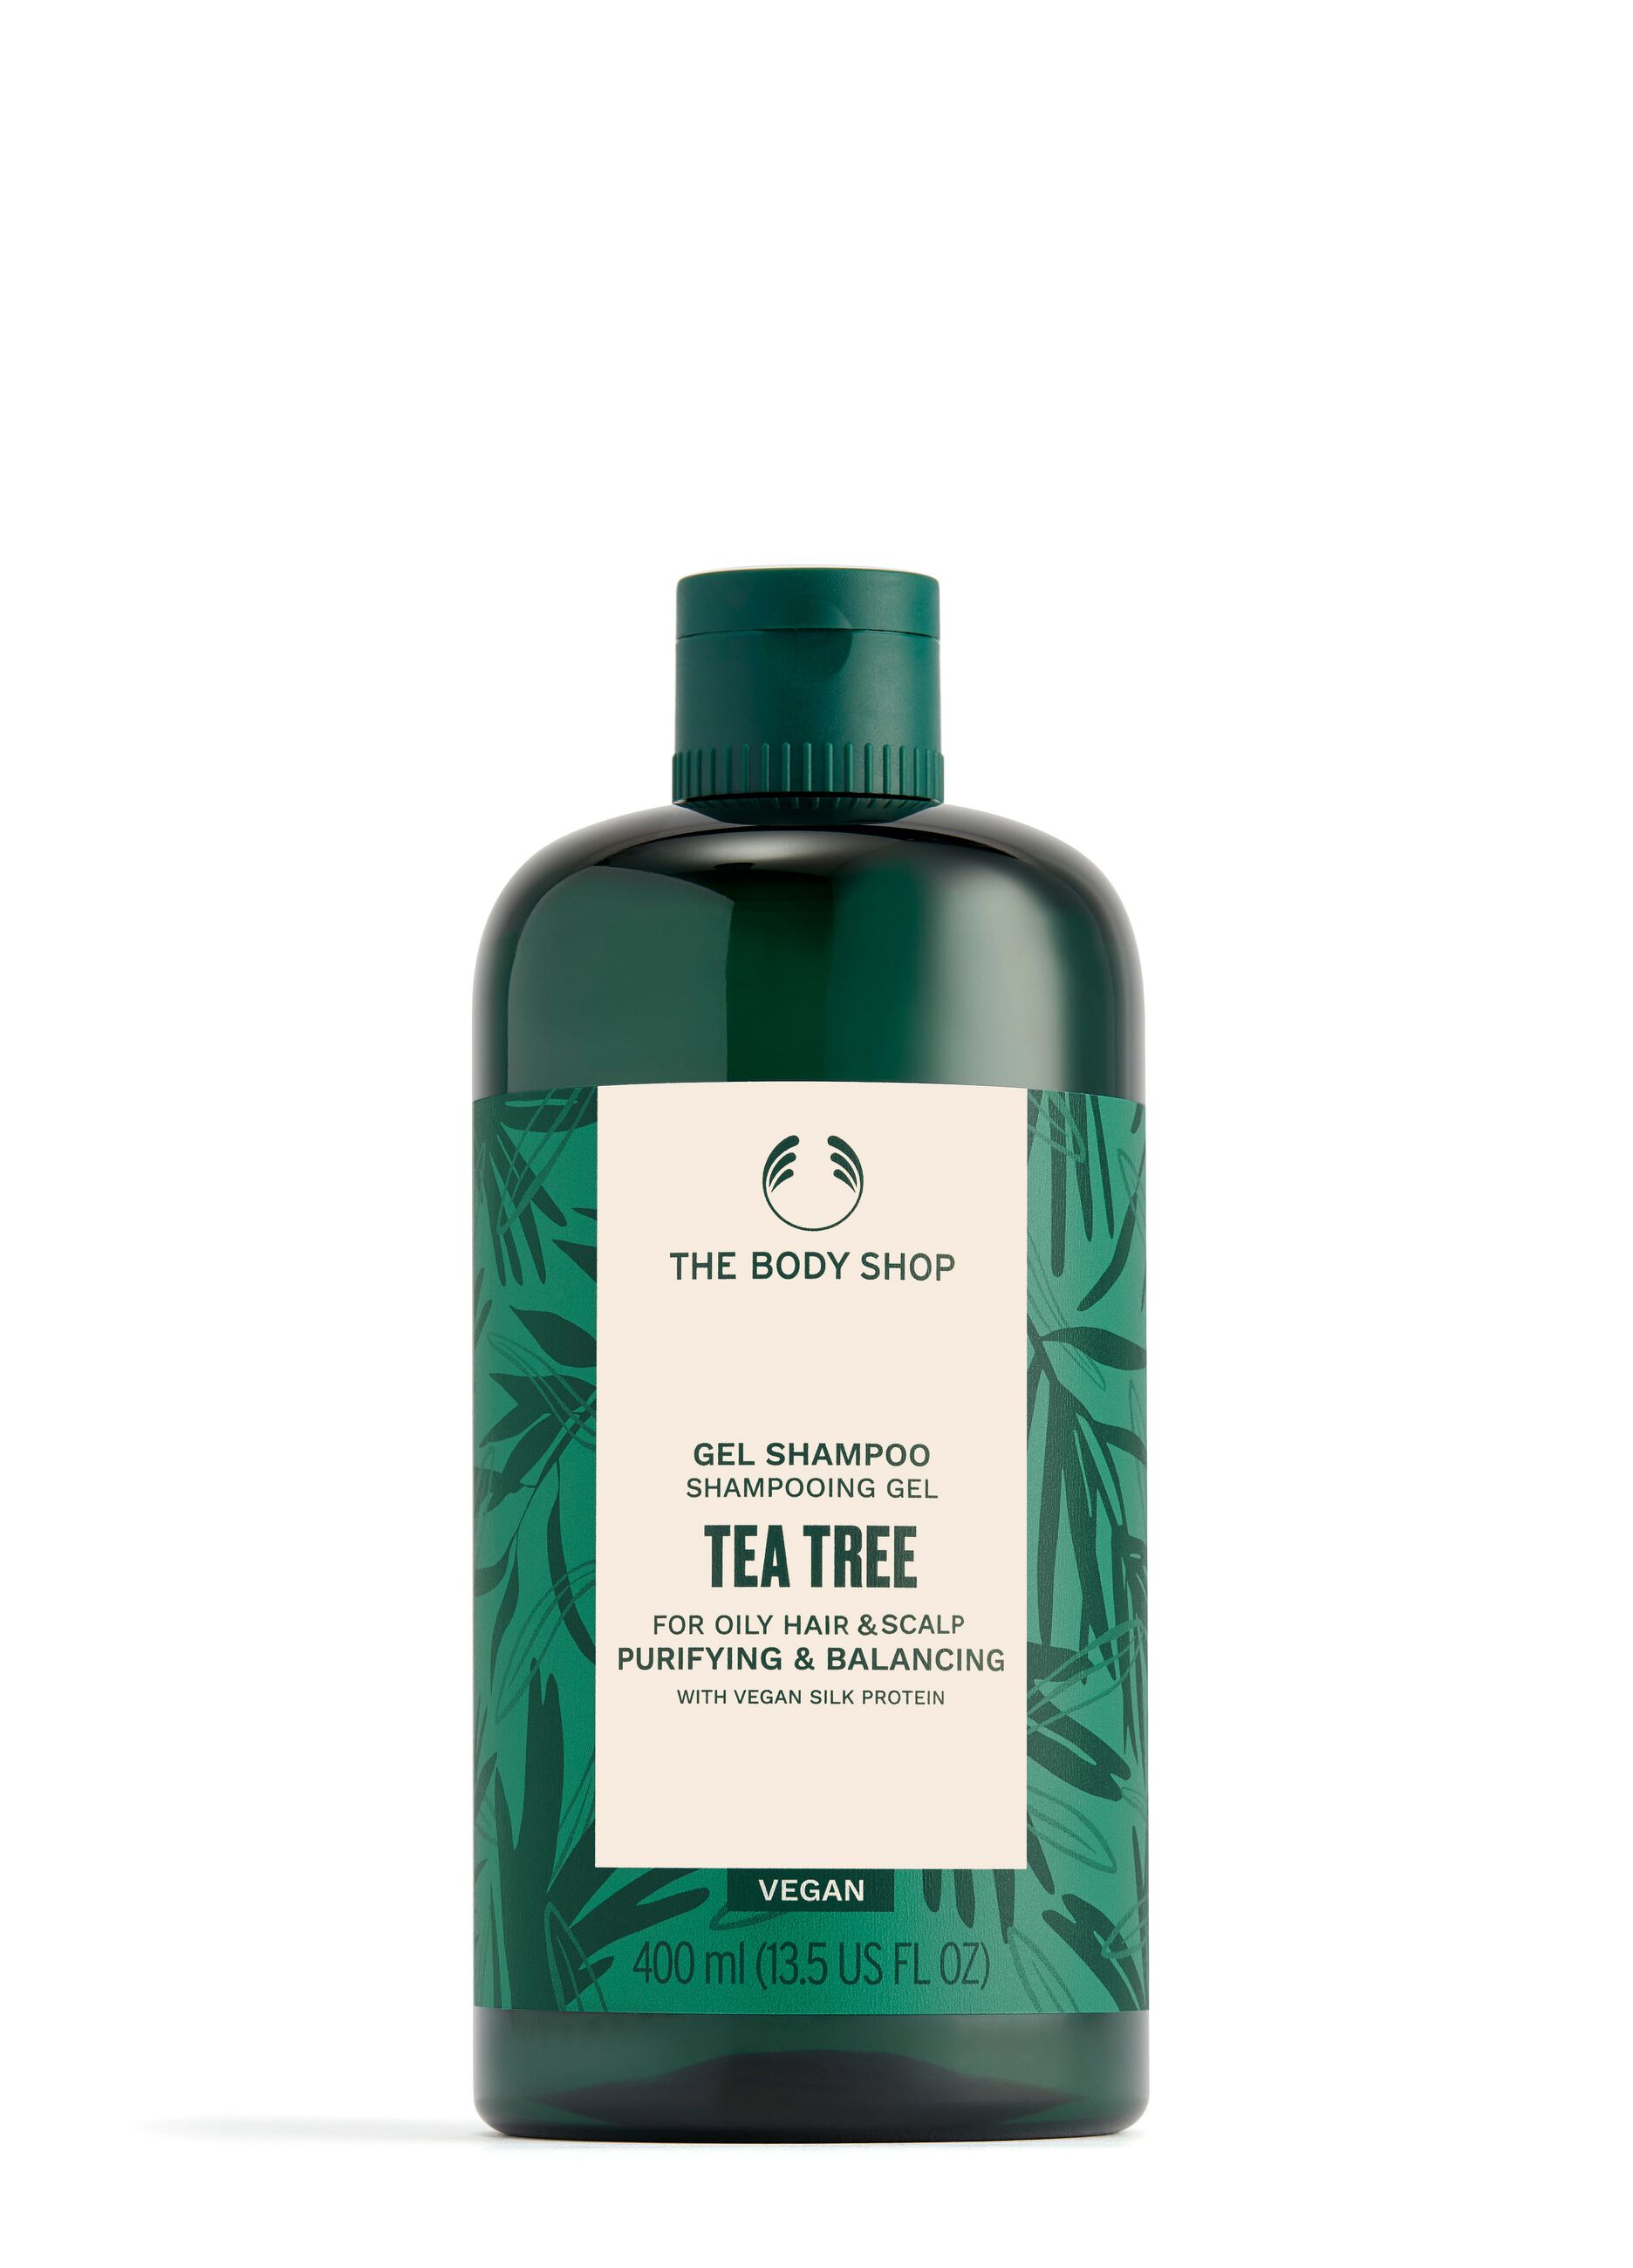 The Body Shop Tea Tree purifying shampoo 400ml